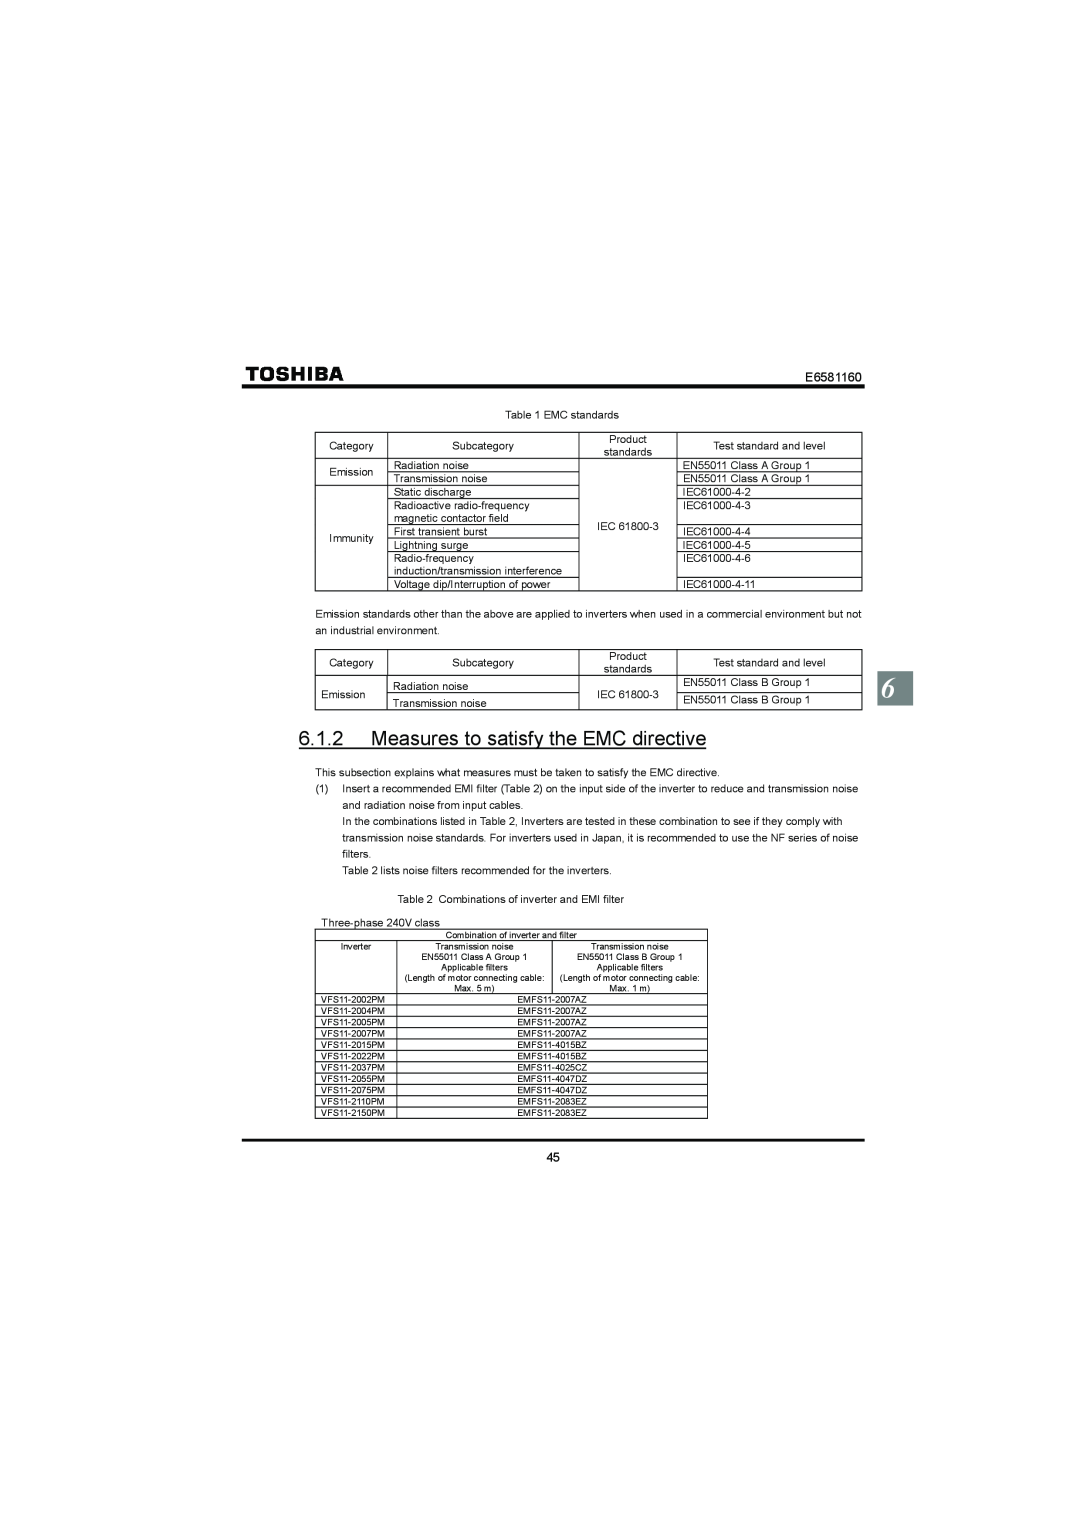 Toshiba VF-S11 manual 6.1.2Measures to satisfy the EMC directive, E6581160 